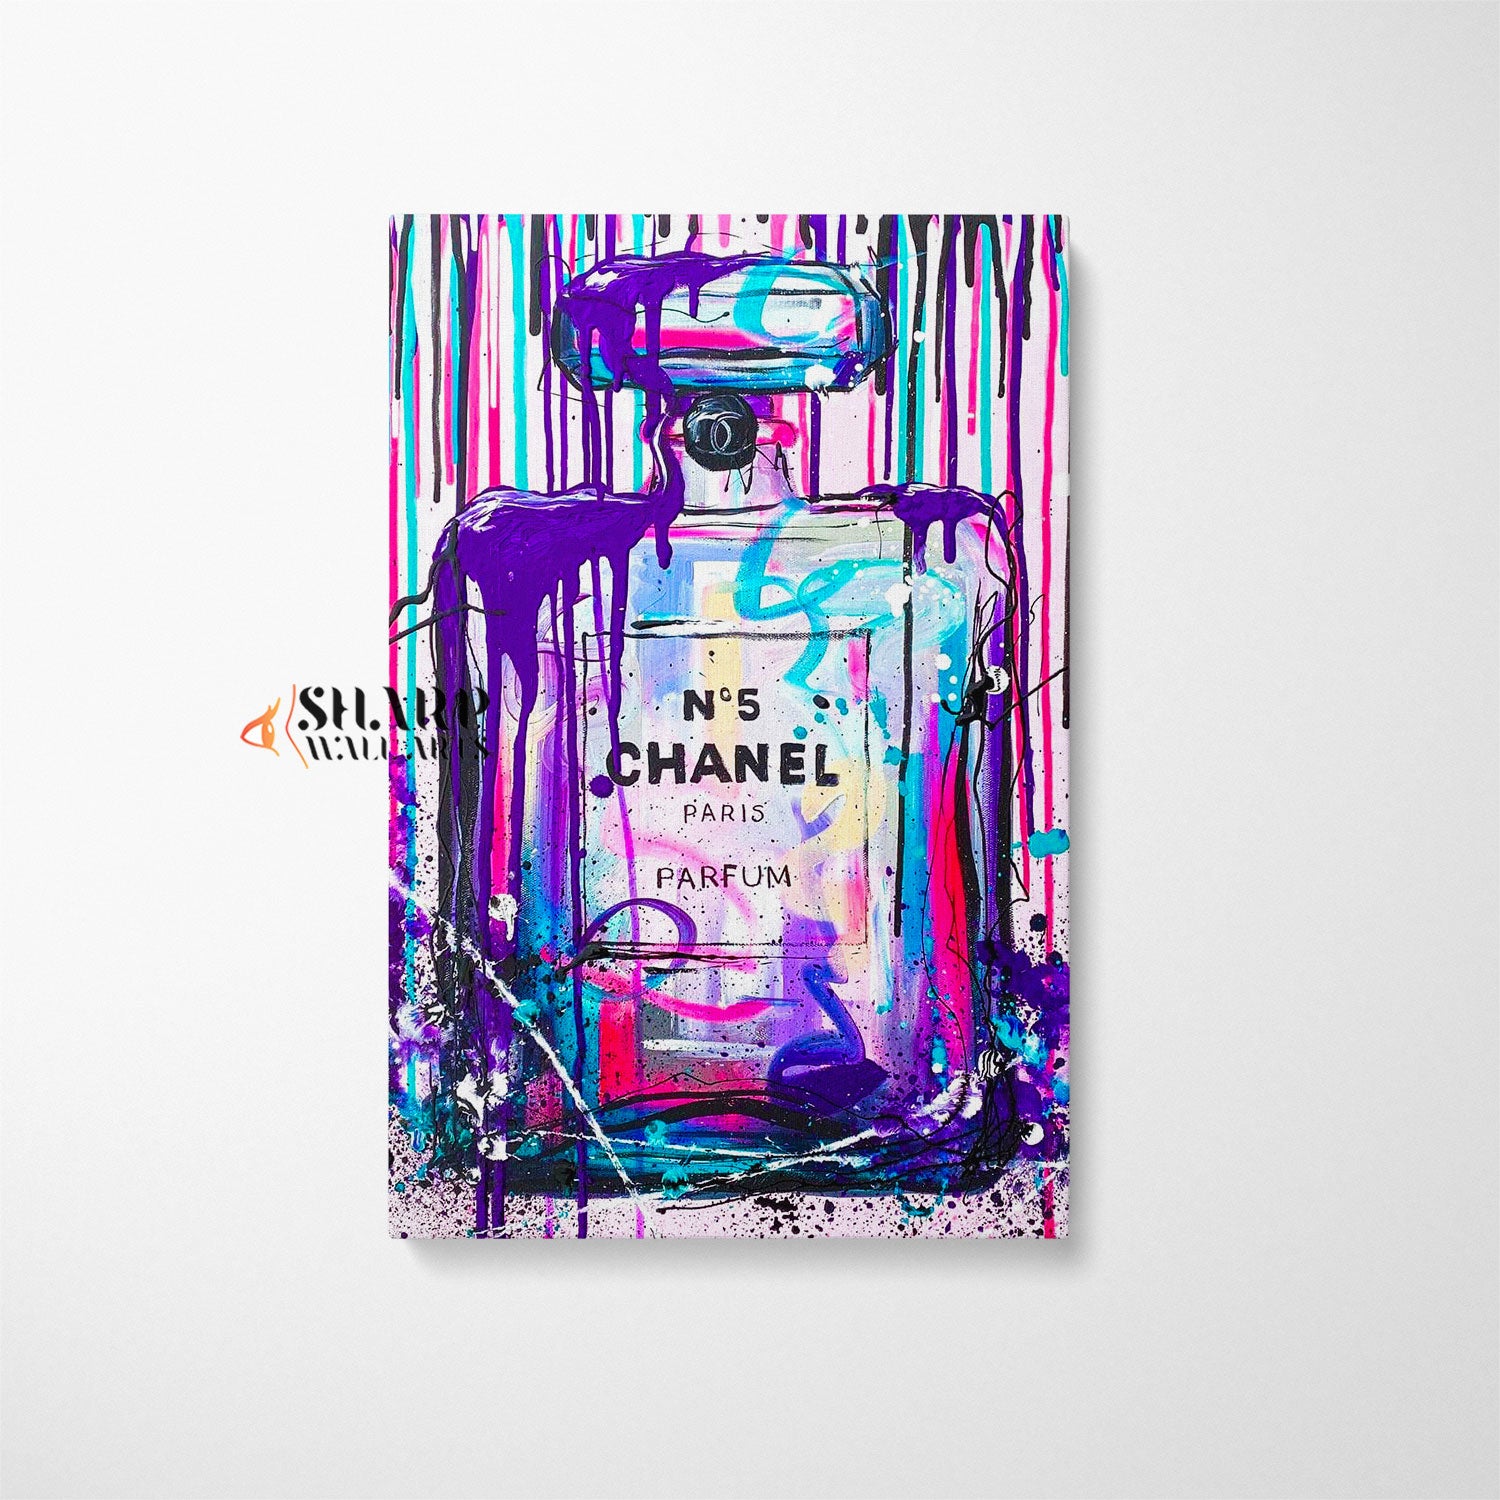 Chanel Perfume Bottle Graffiti Canvas Wall Art